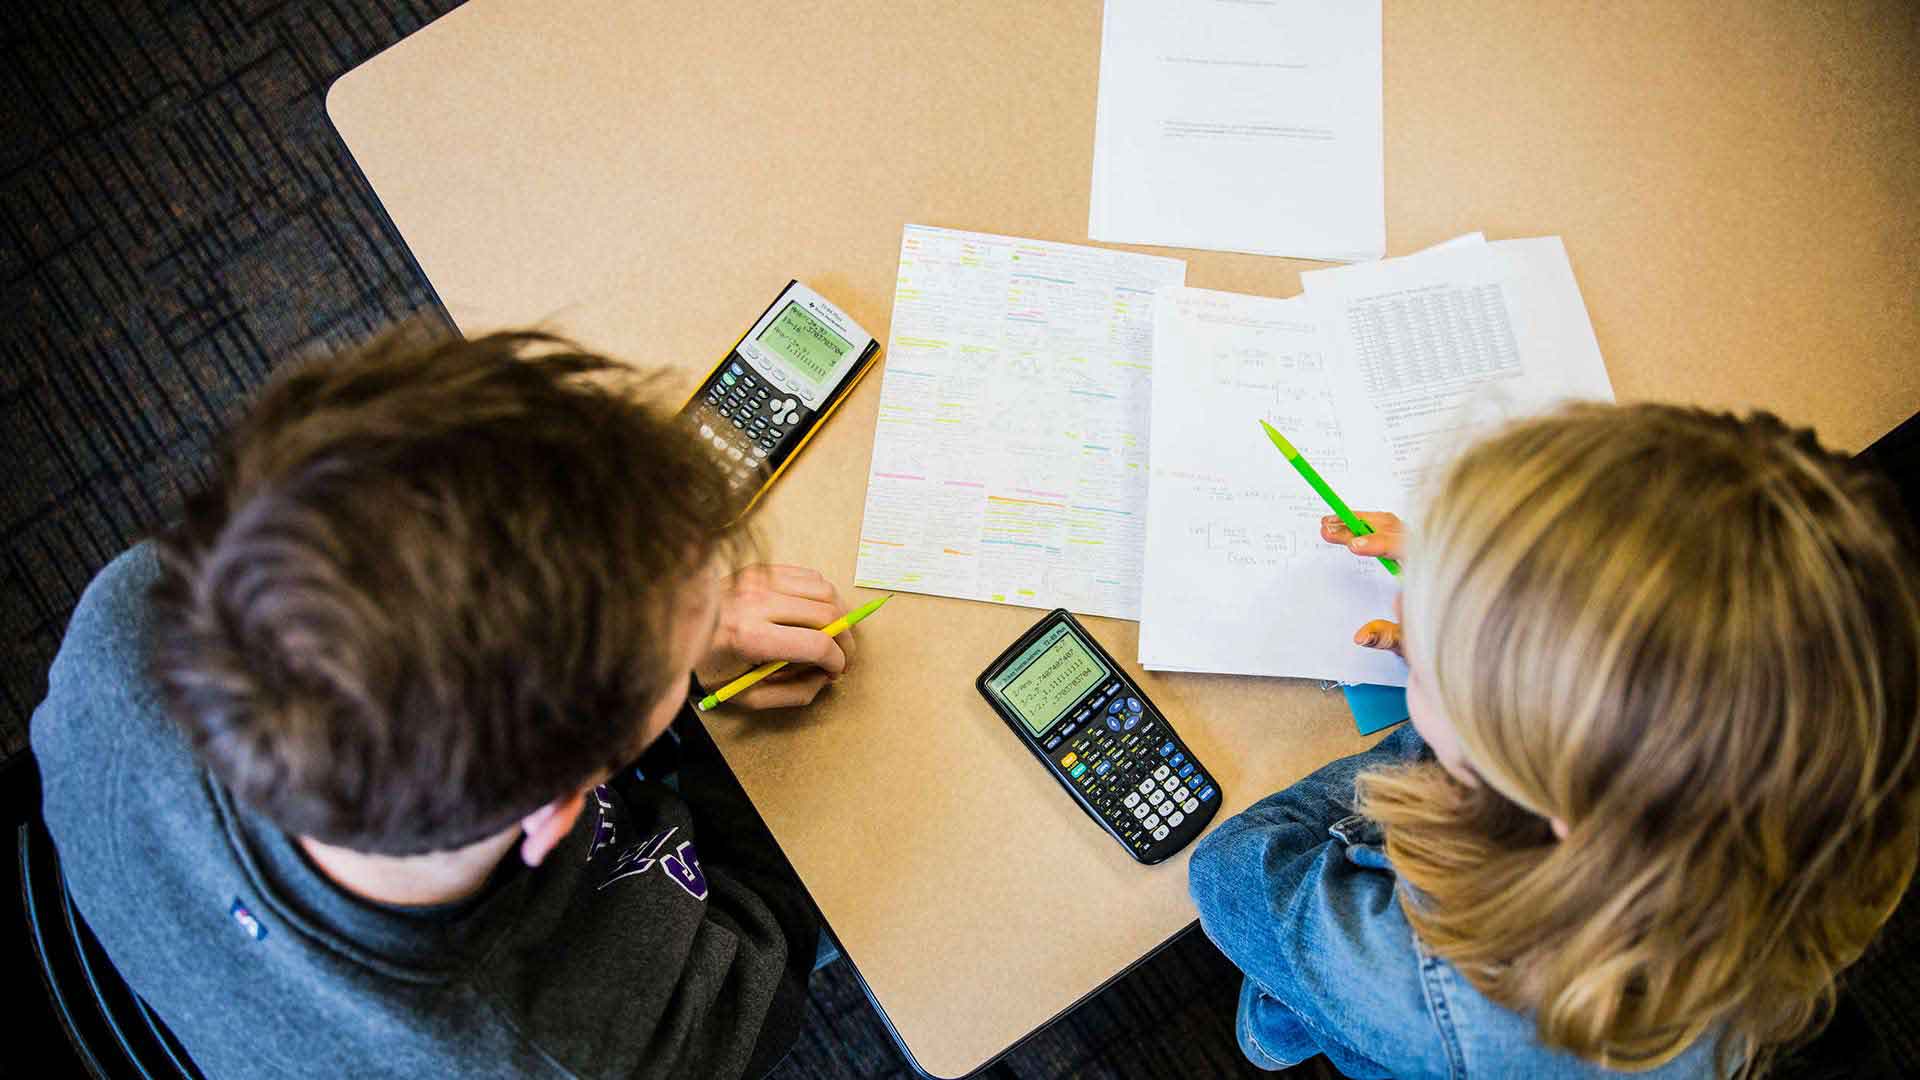 Student talk over study materials and a calculator